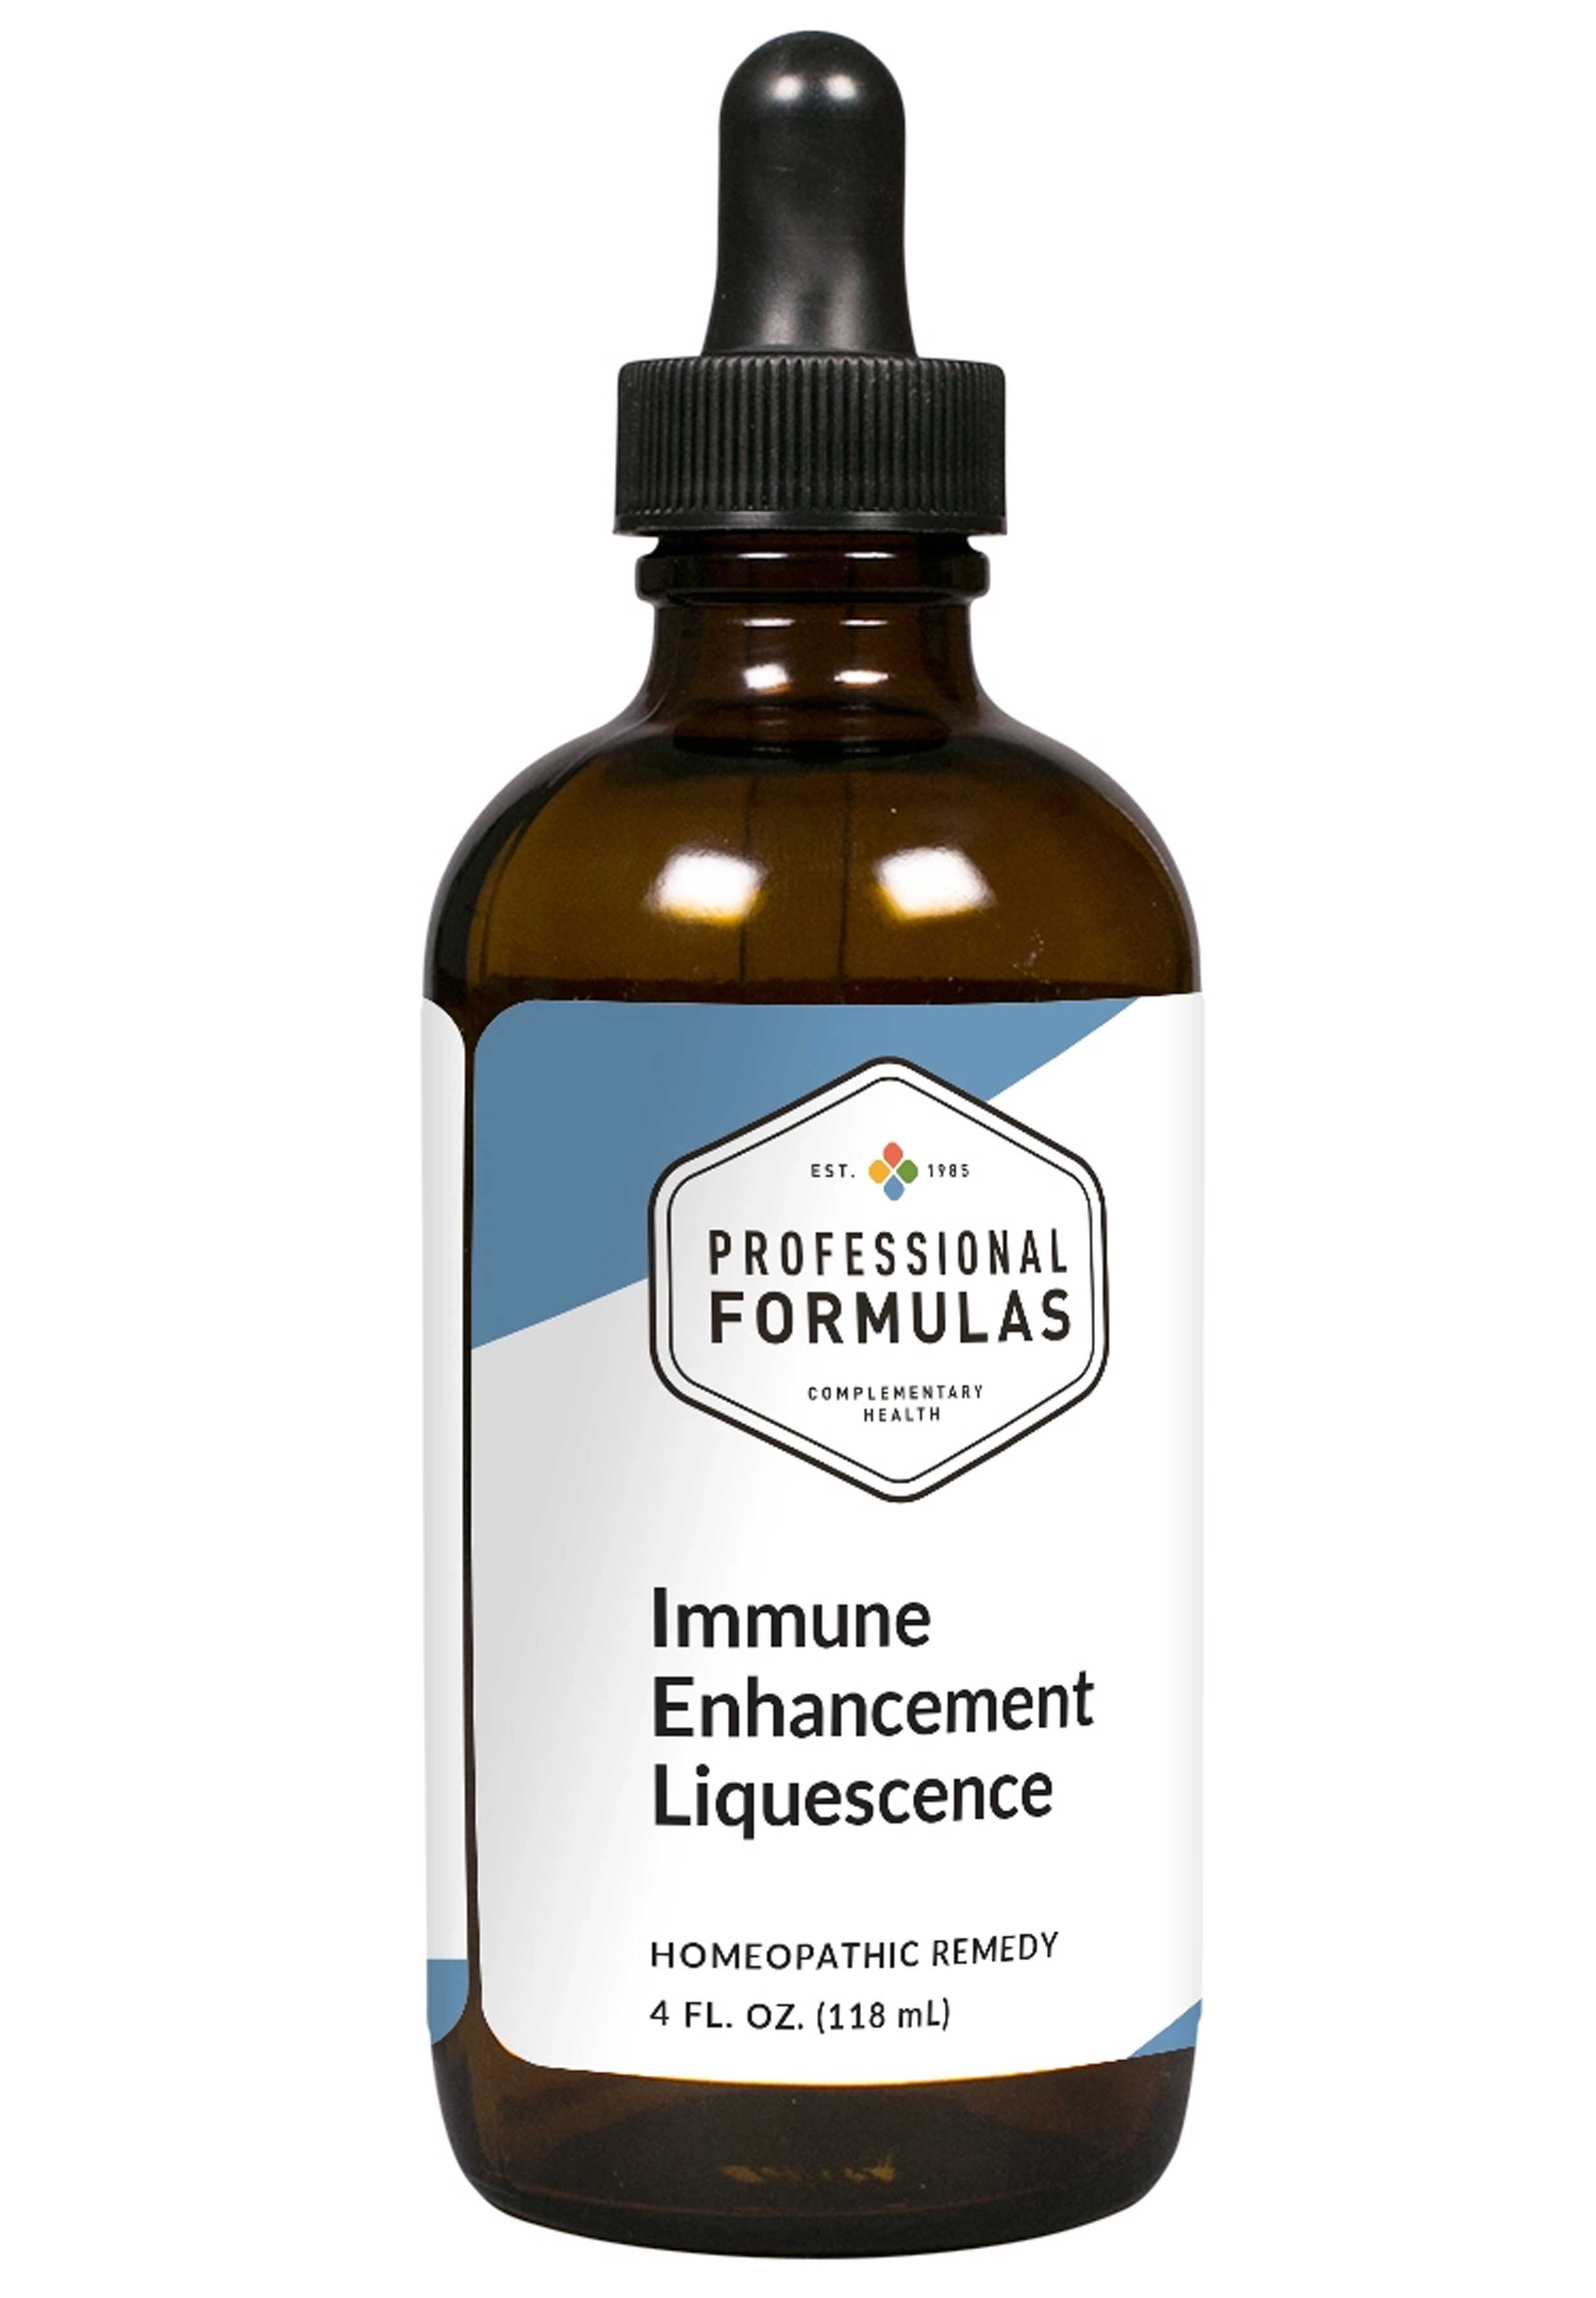 Professional Formulas Immune Enhancement Liquescence